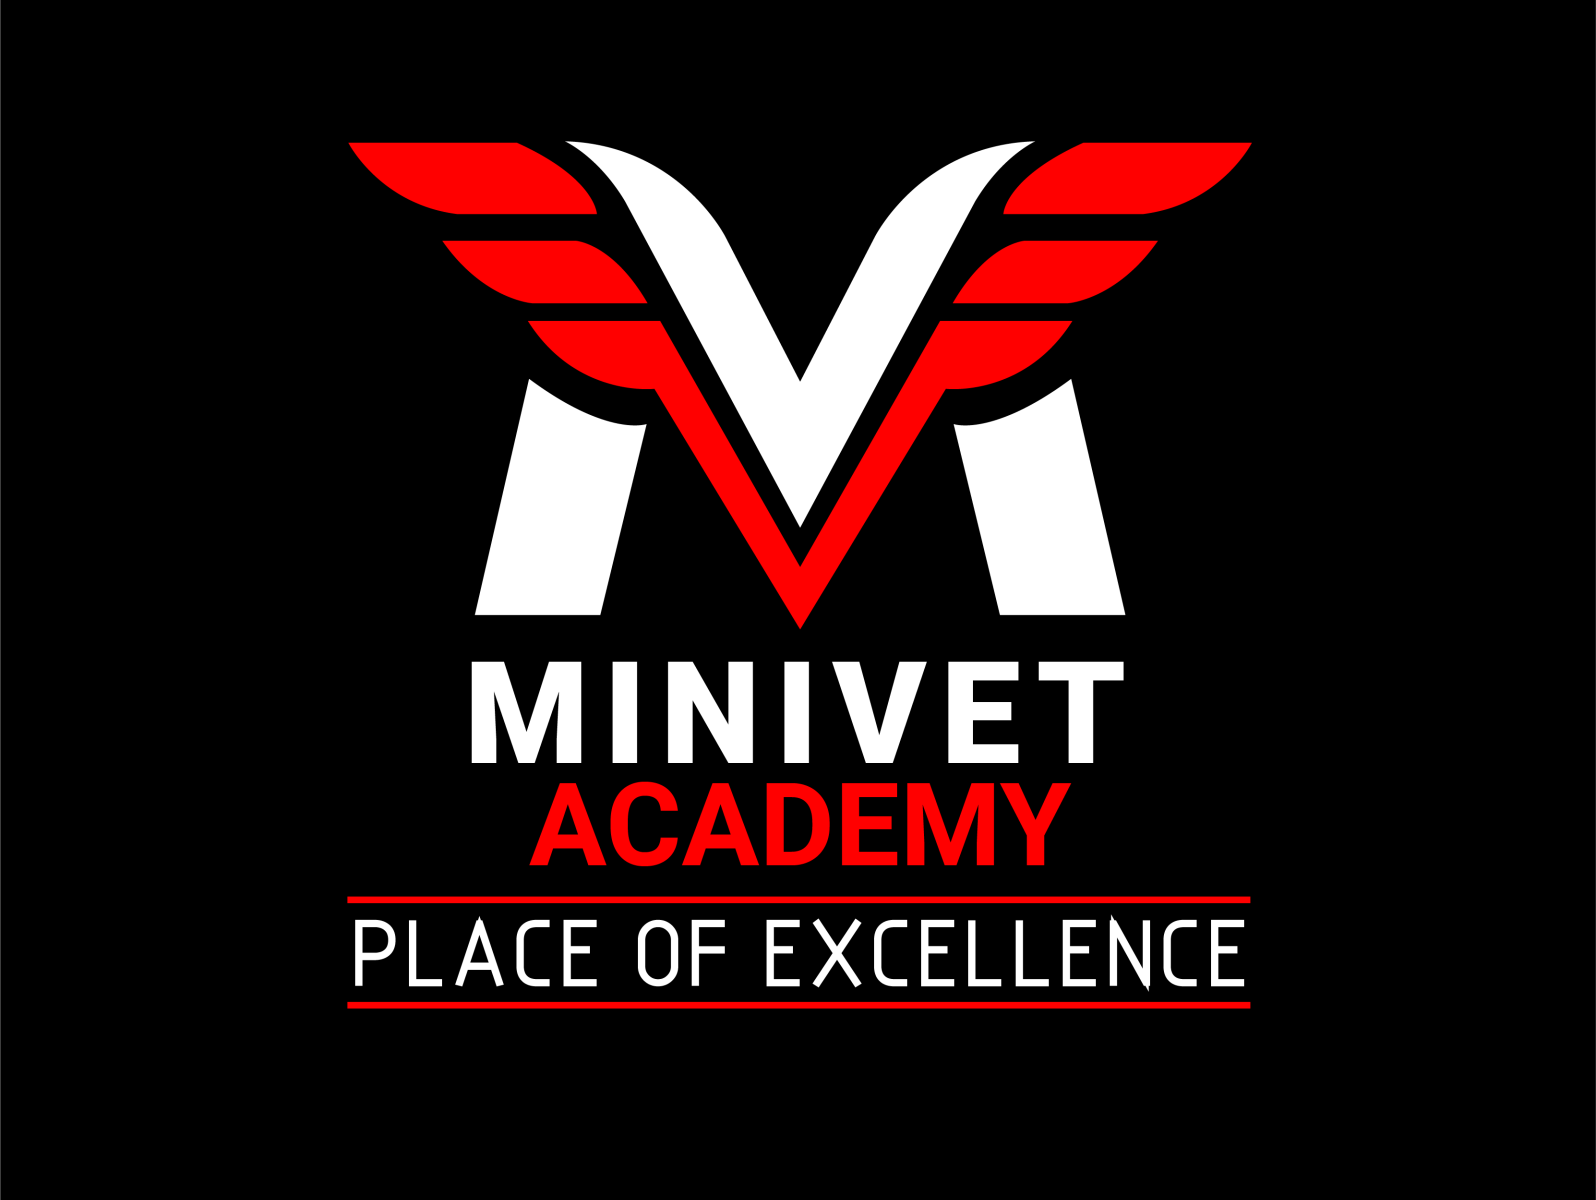 Minivet Academy Logo by Md. Shiful Islam on Dribbble